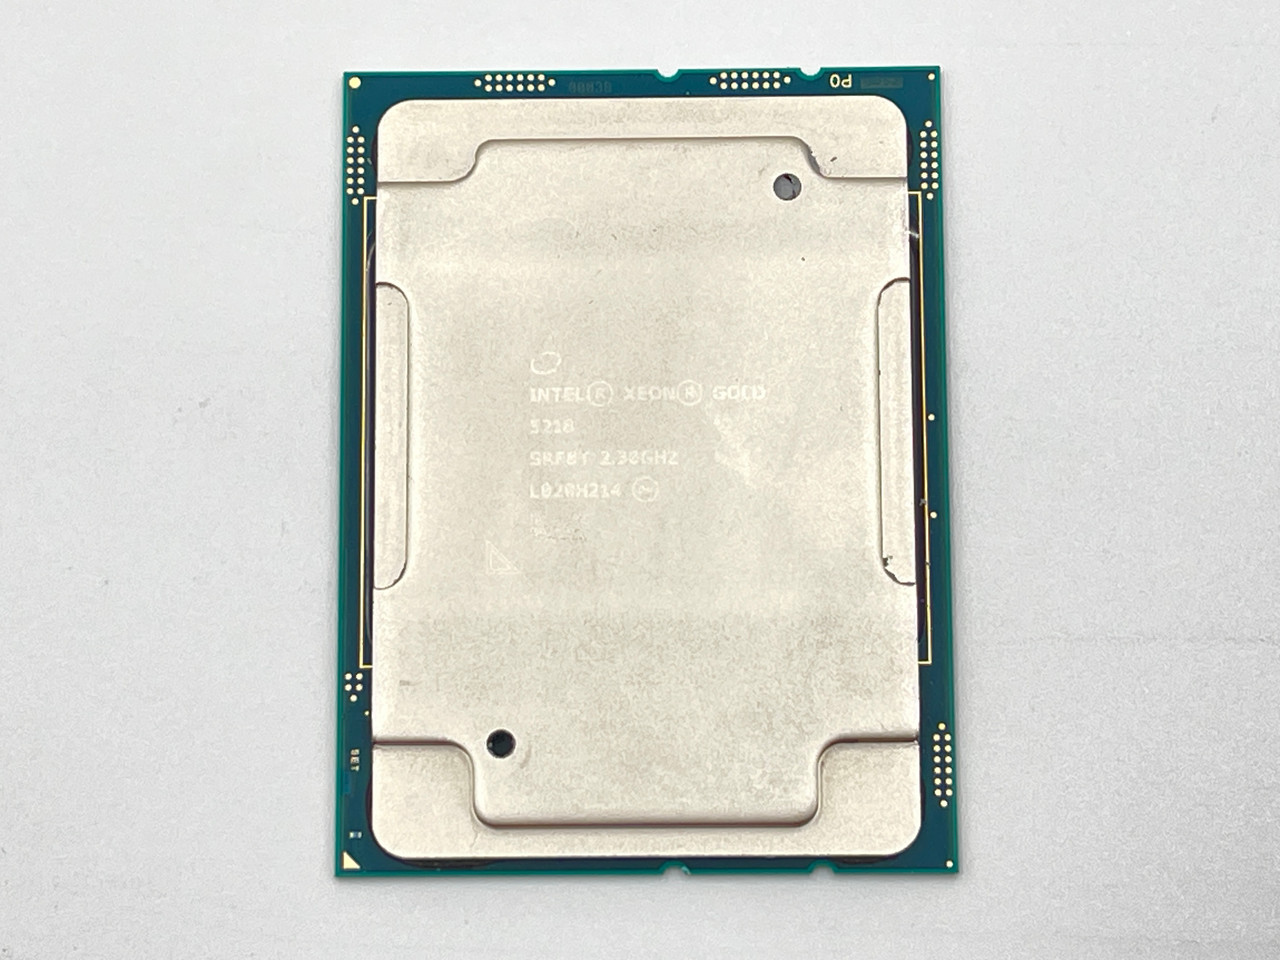 INTEL XEON GOLD 5218 SRF8T 2.30 GHZ 22MB L3 CACHE CPU PROCESSOR